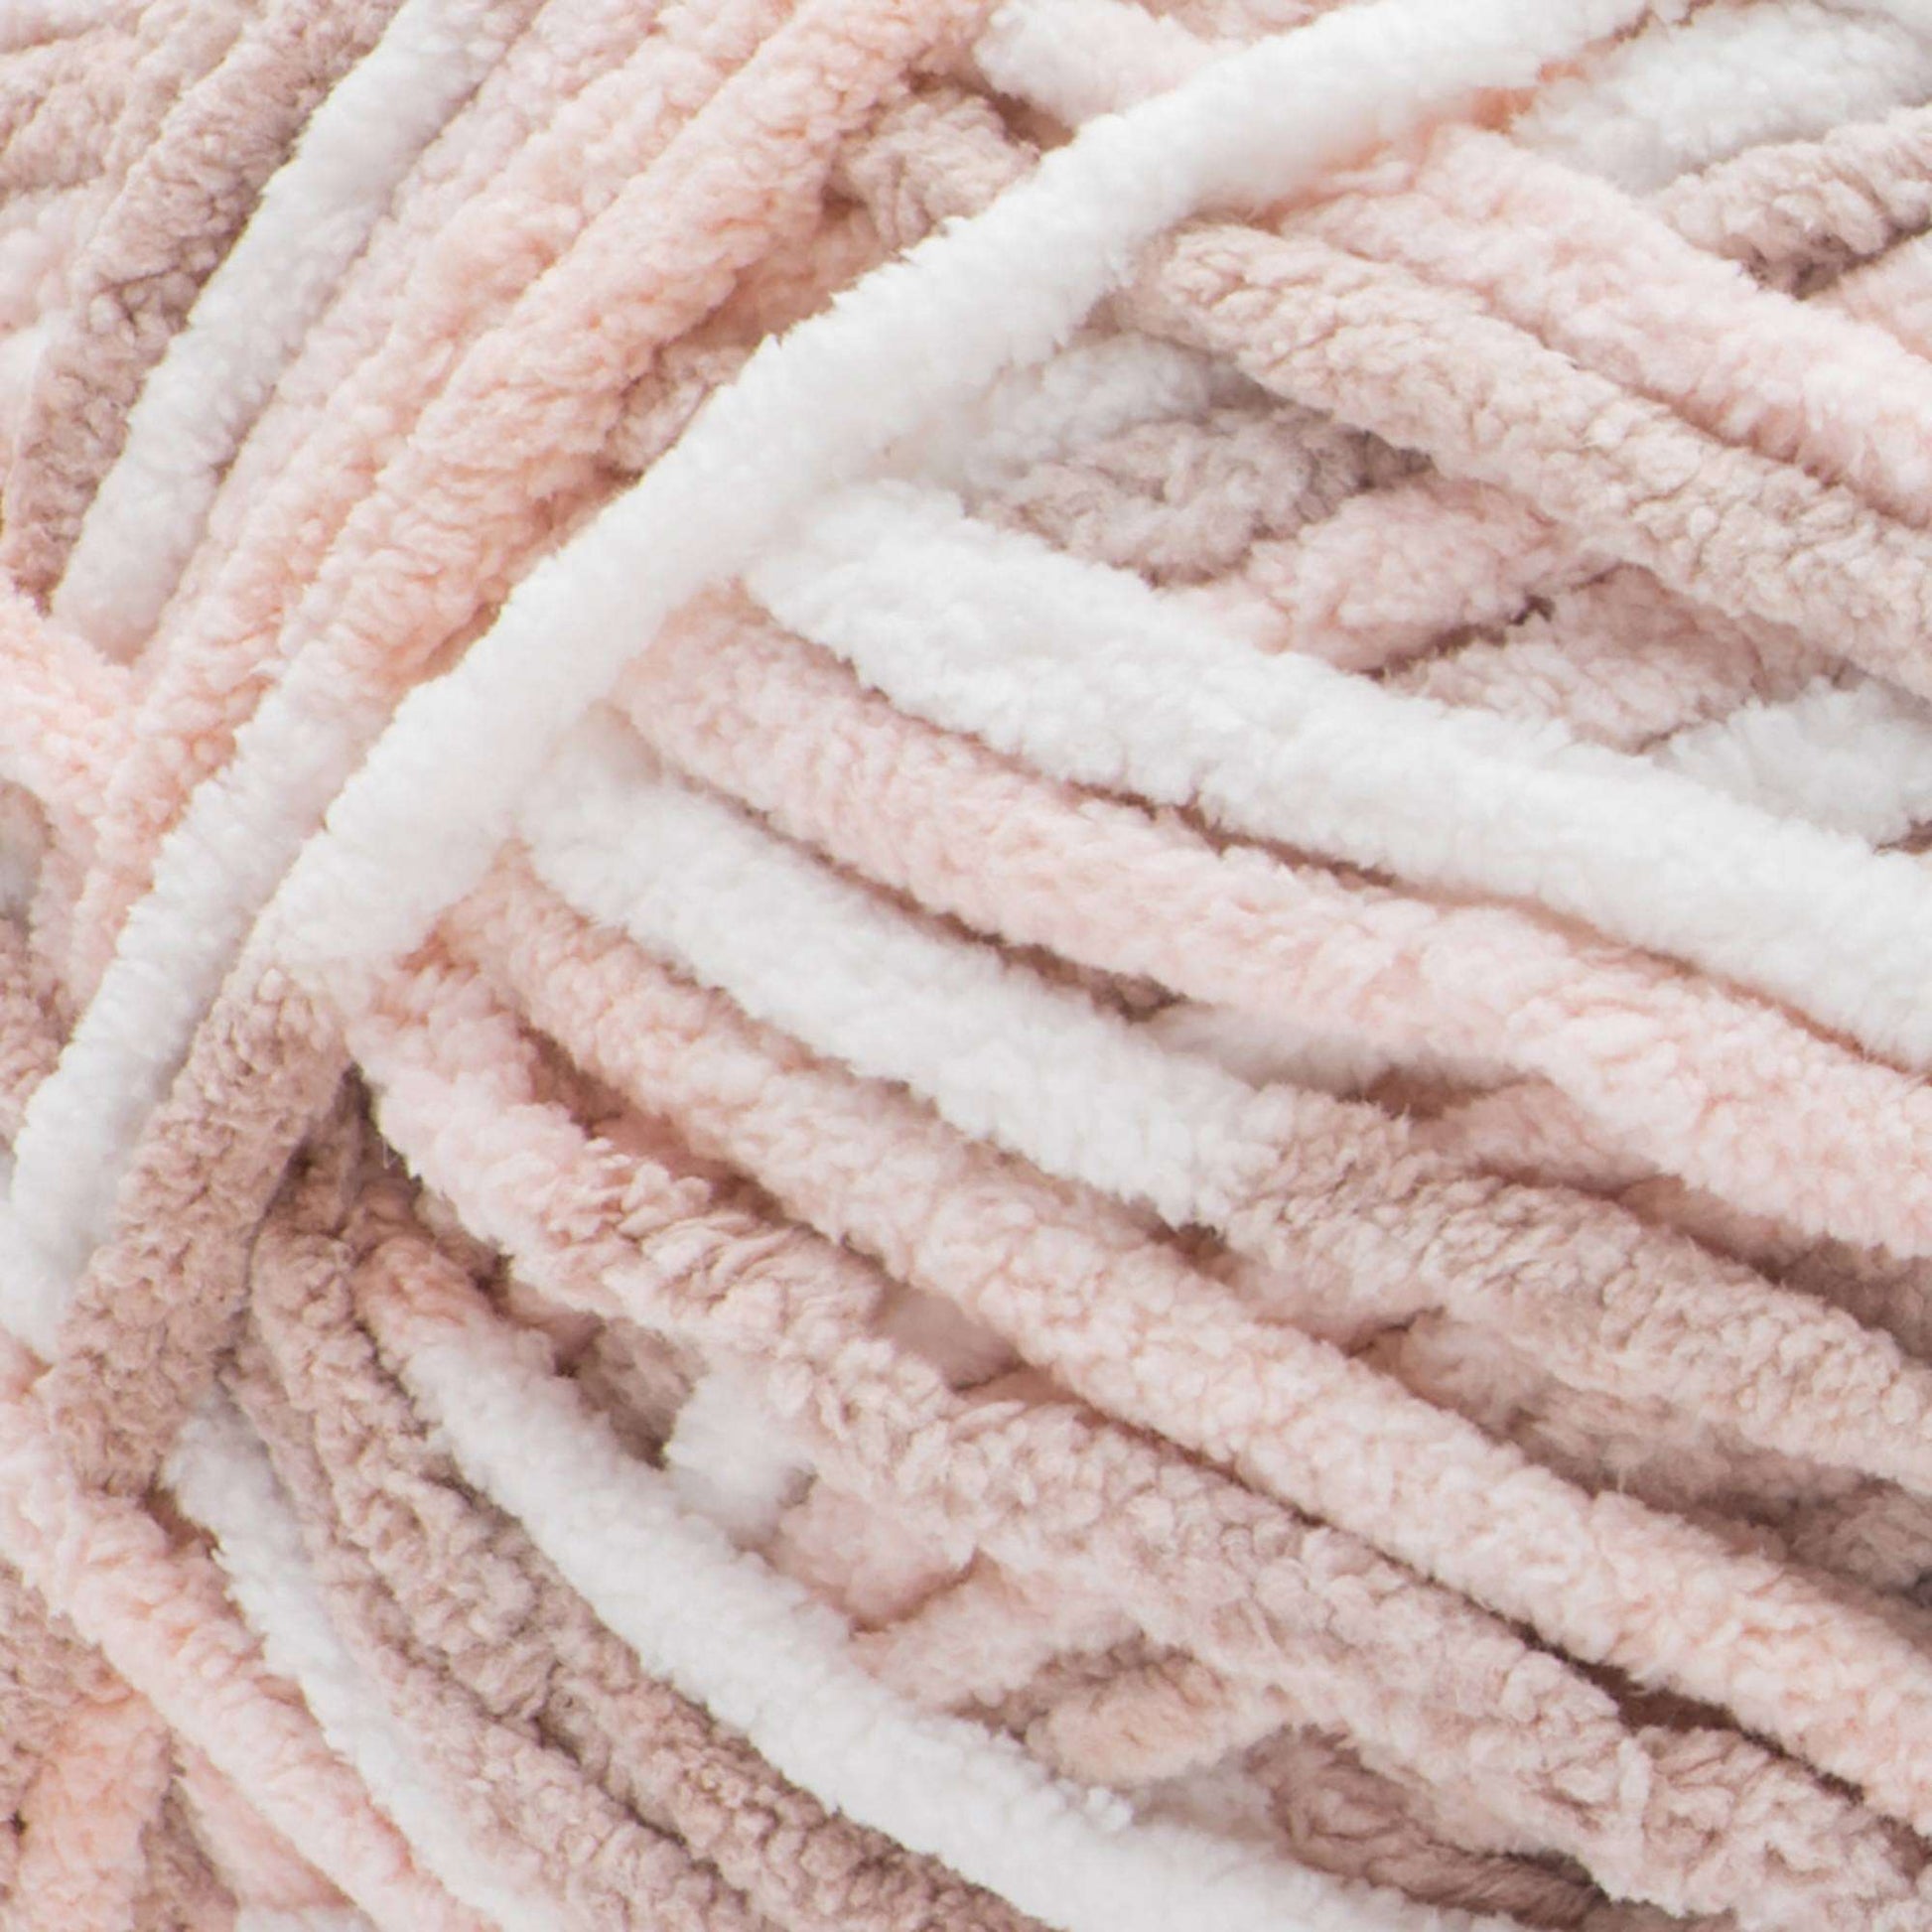 Bernat Blanket Big Ball Yarn-Blush Pink